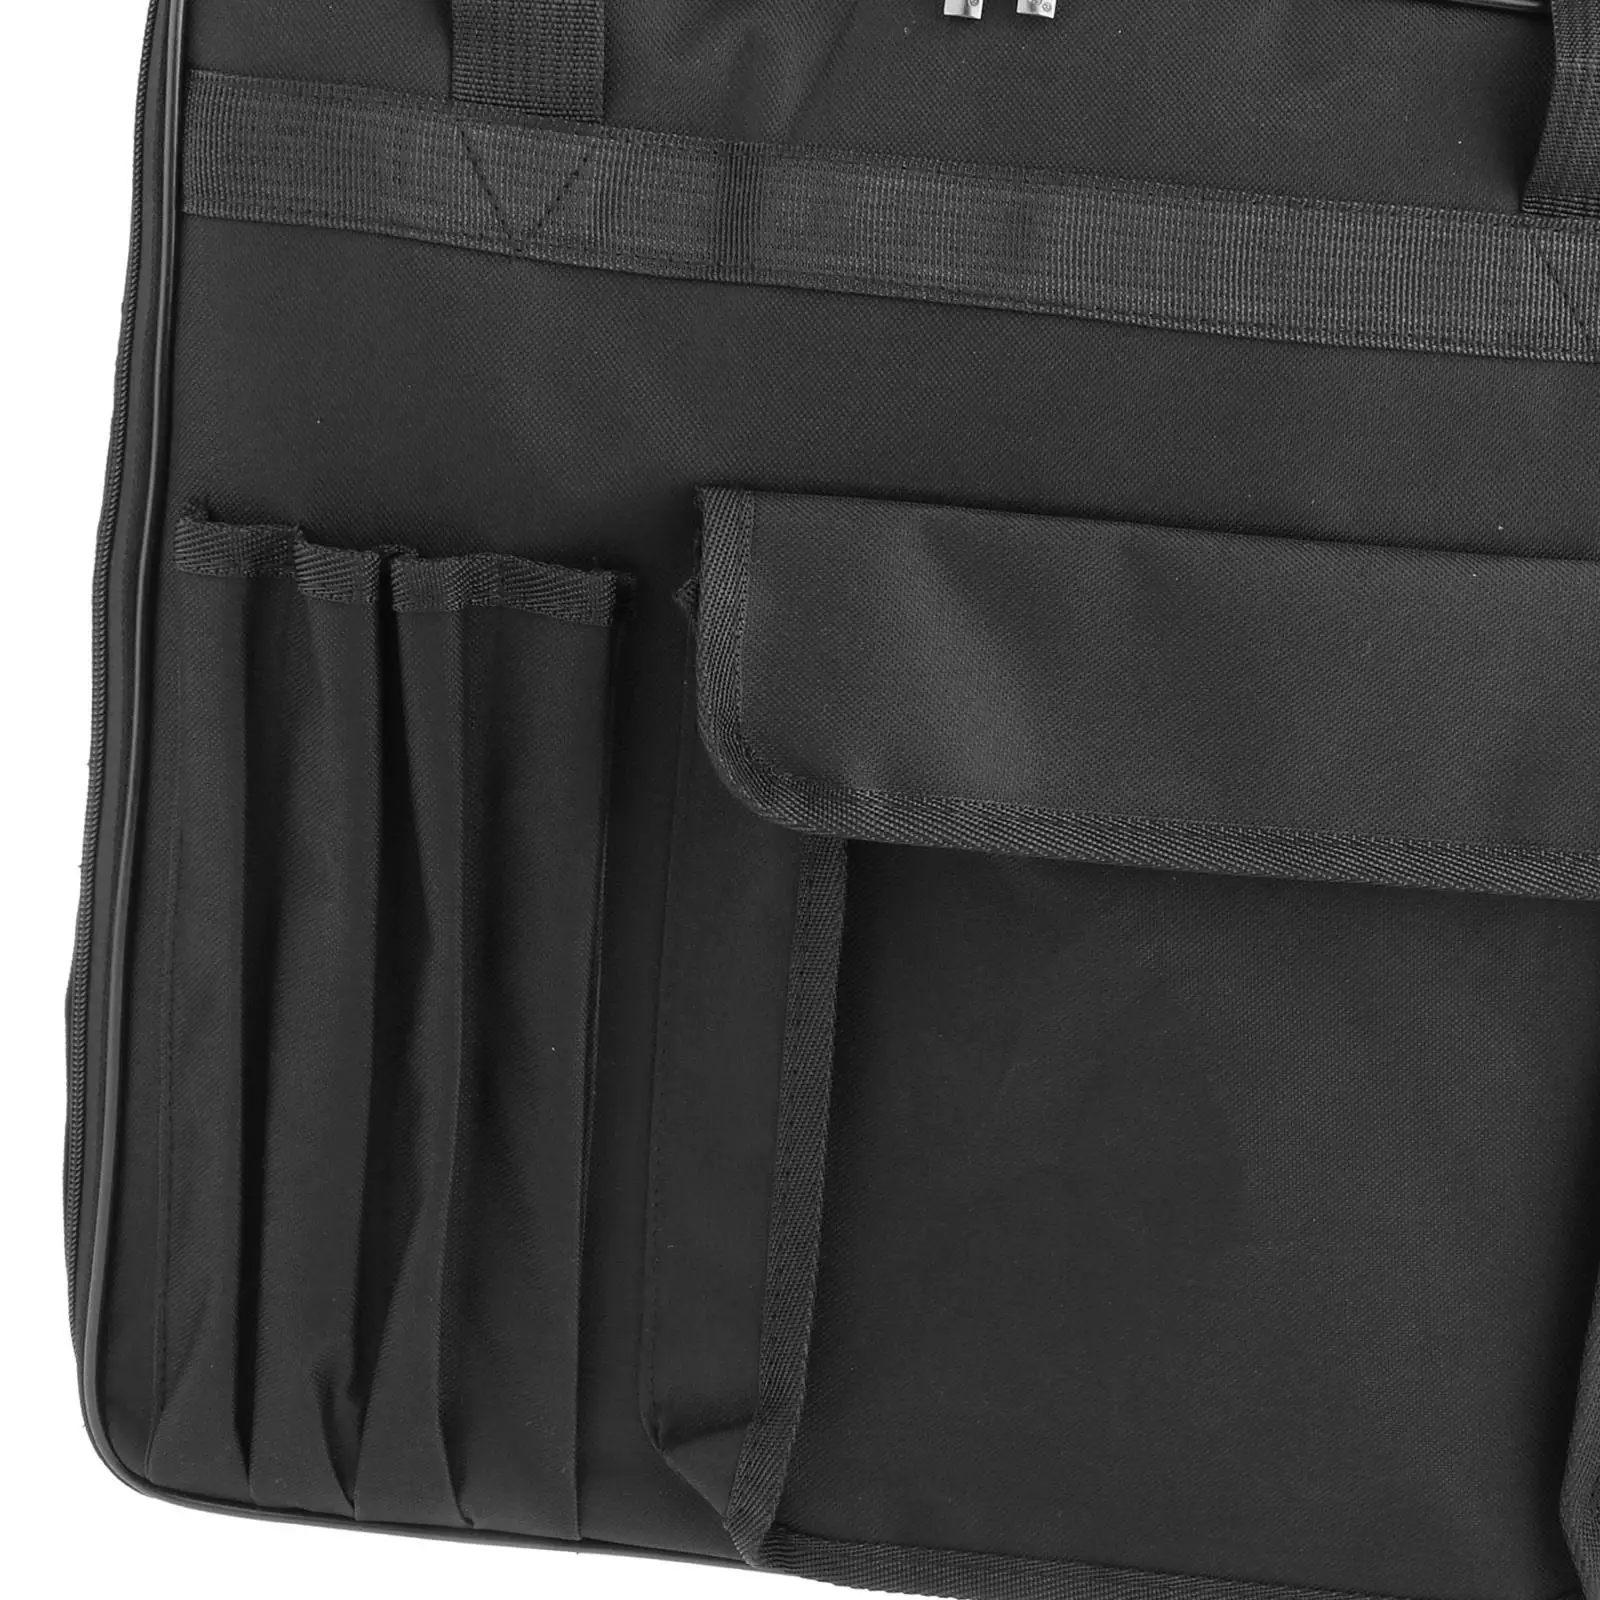 Wateproof Oxford Cloth Snare Drum Storage Bag Backpack Case with Shoulder Straps